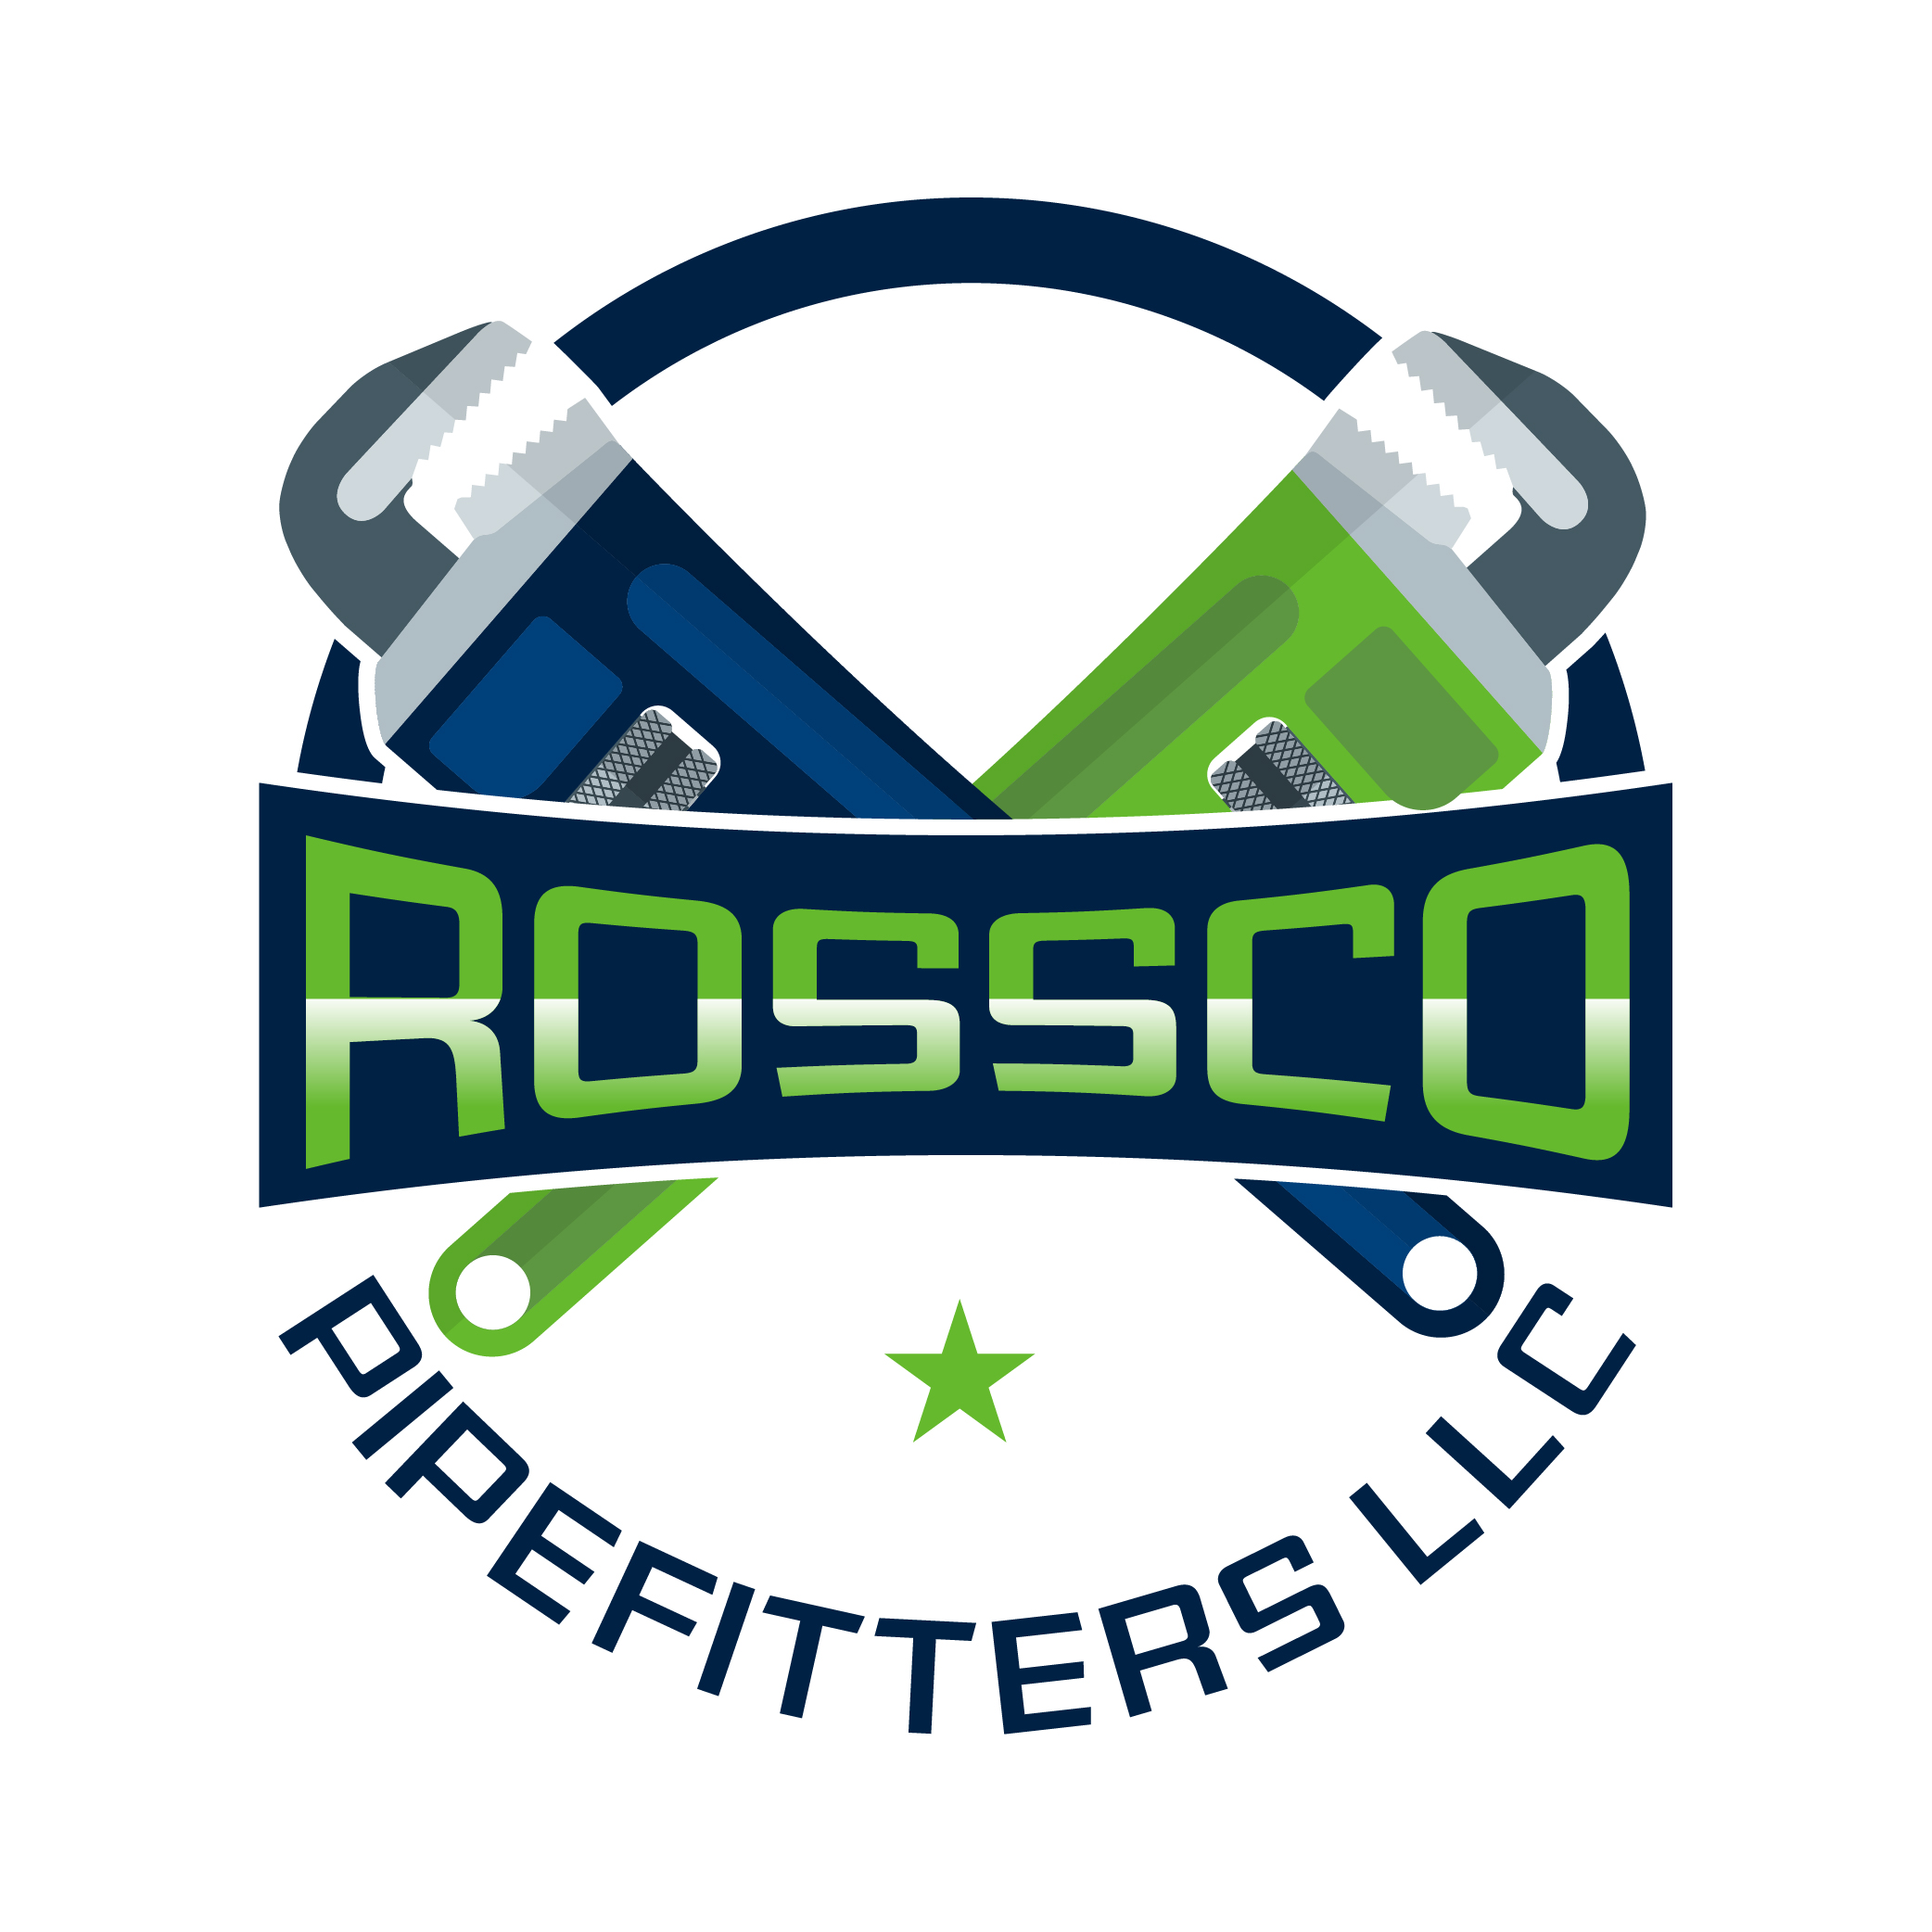 RossCo Service Plumbers Logo